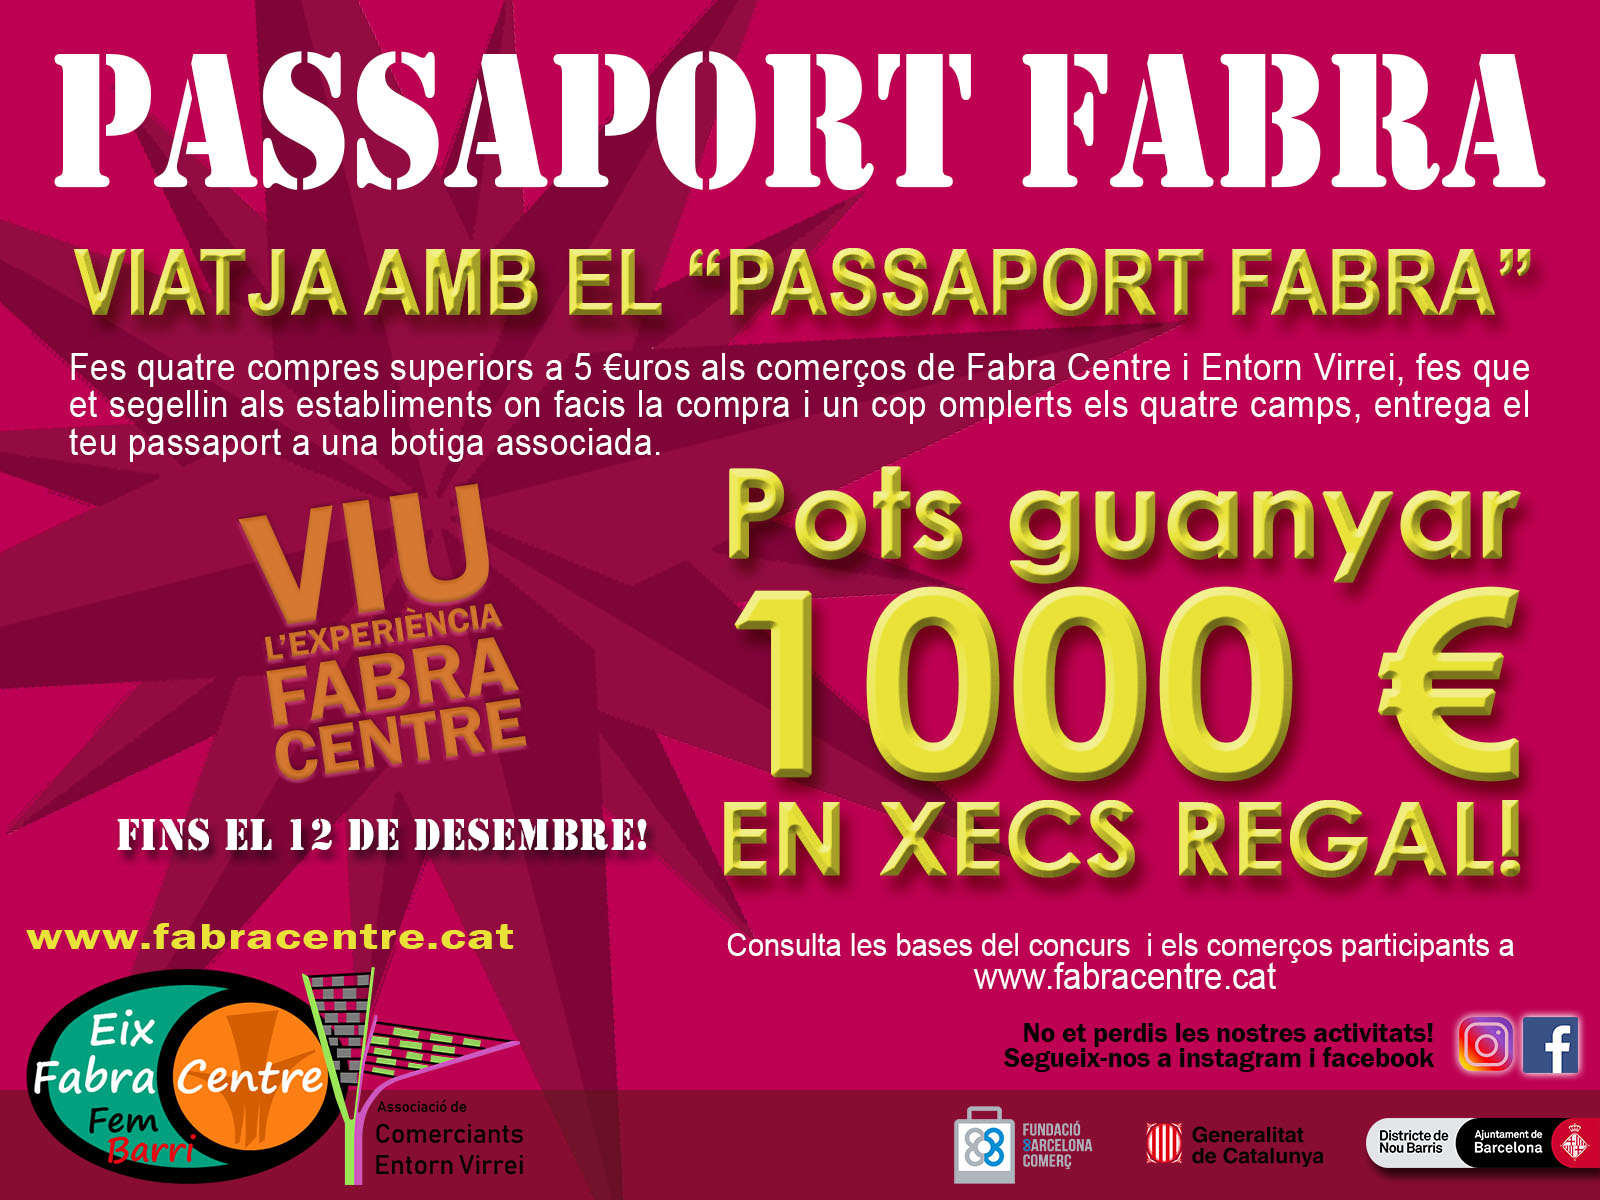 Passaport Fabra, para viajar por las tiendas de Fabra i Puig